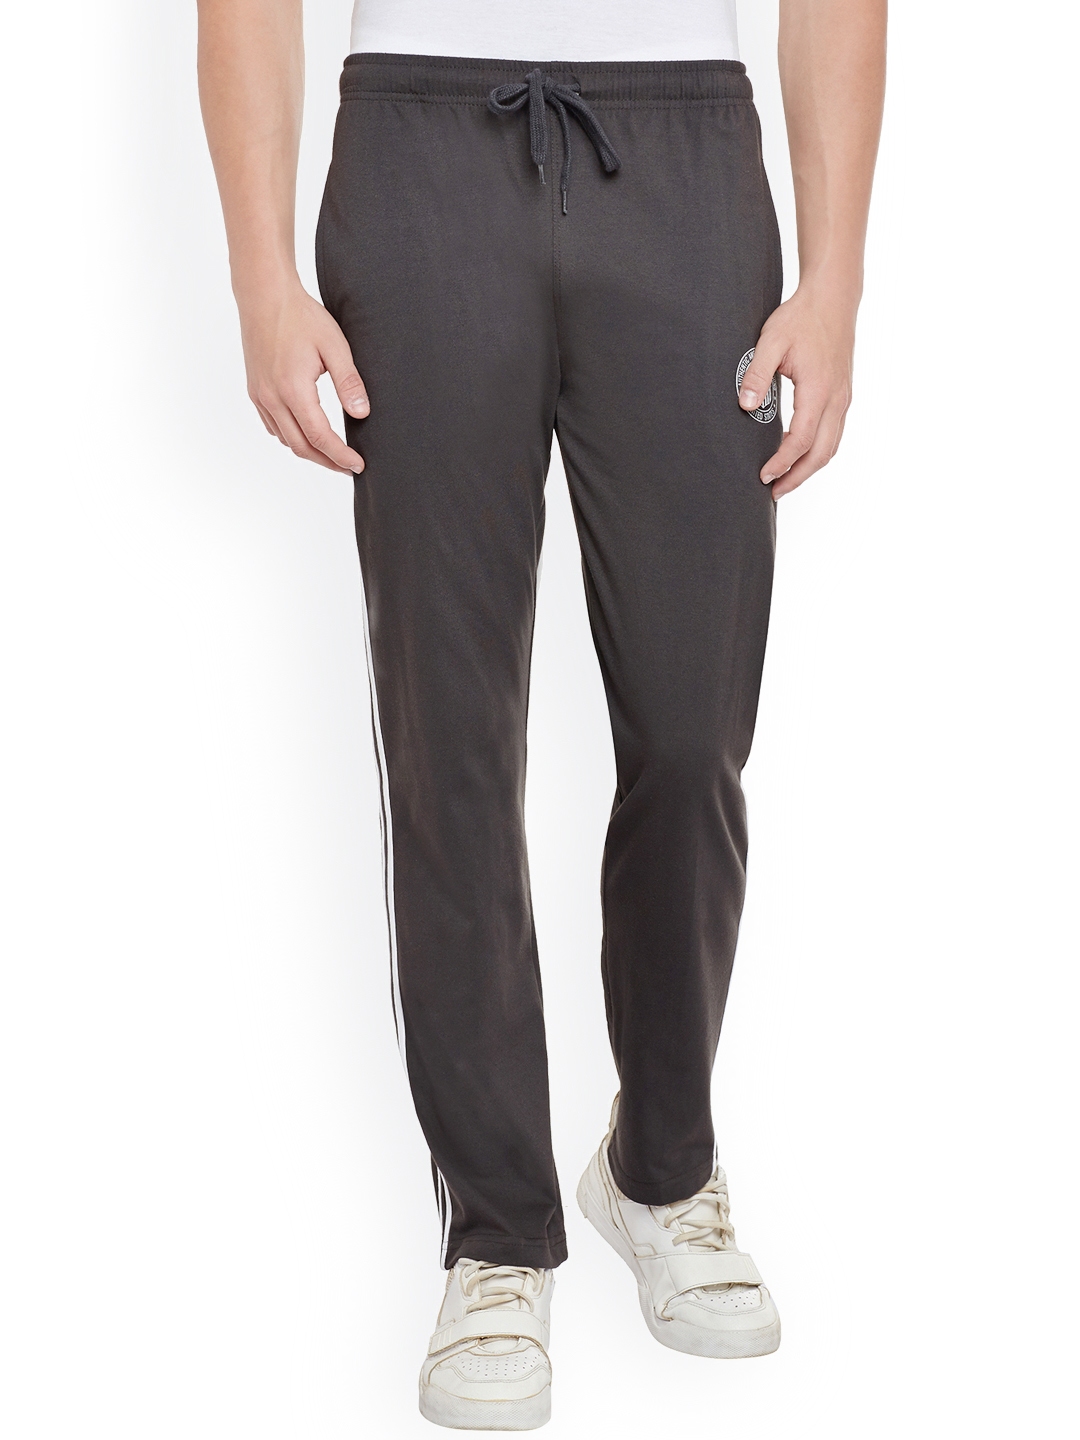 Buy Duke Charcoal Grey Track Pants - Track Pants for Men 1904368 | Myntra